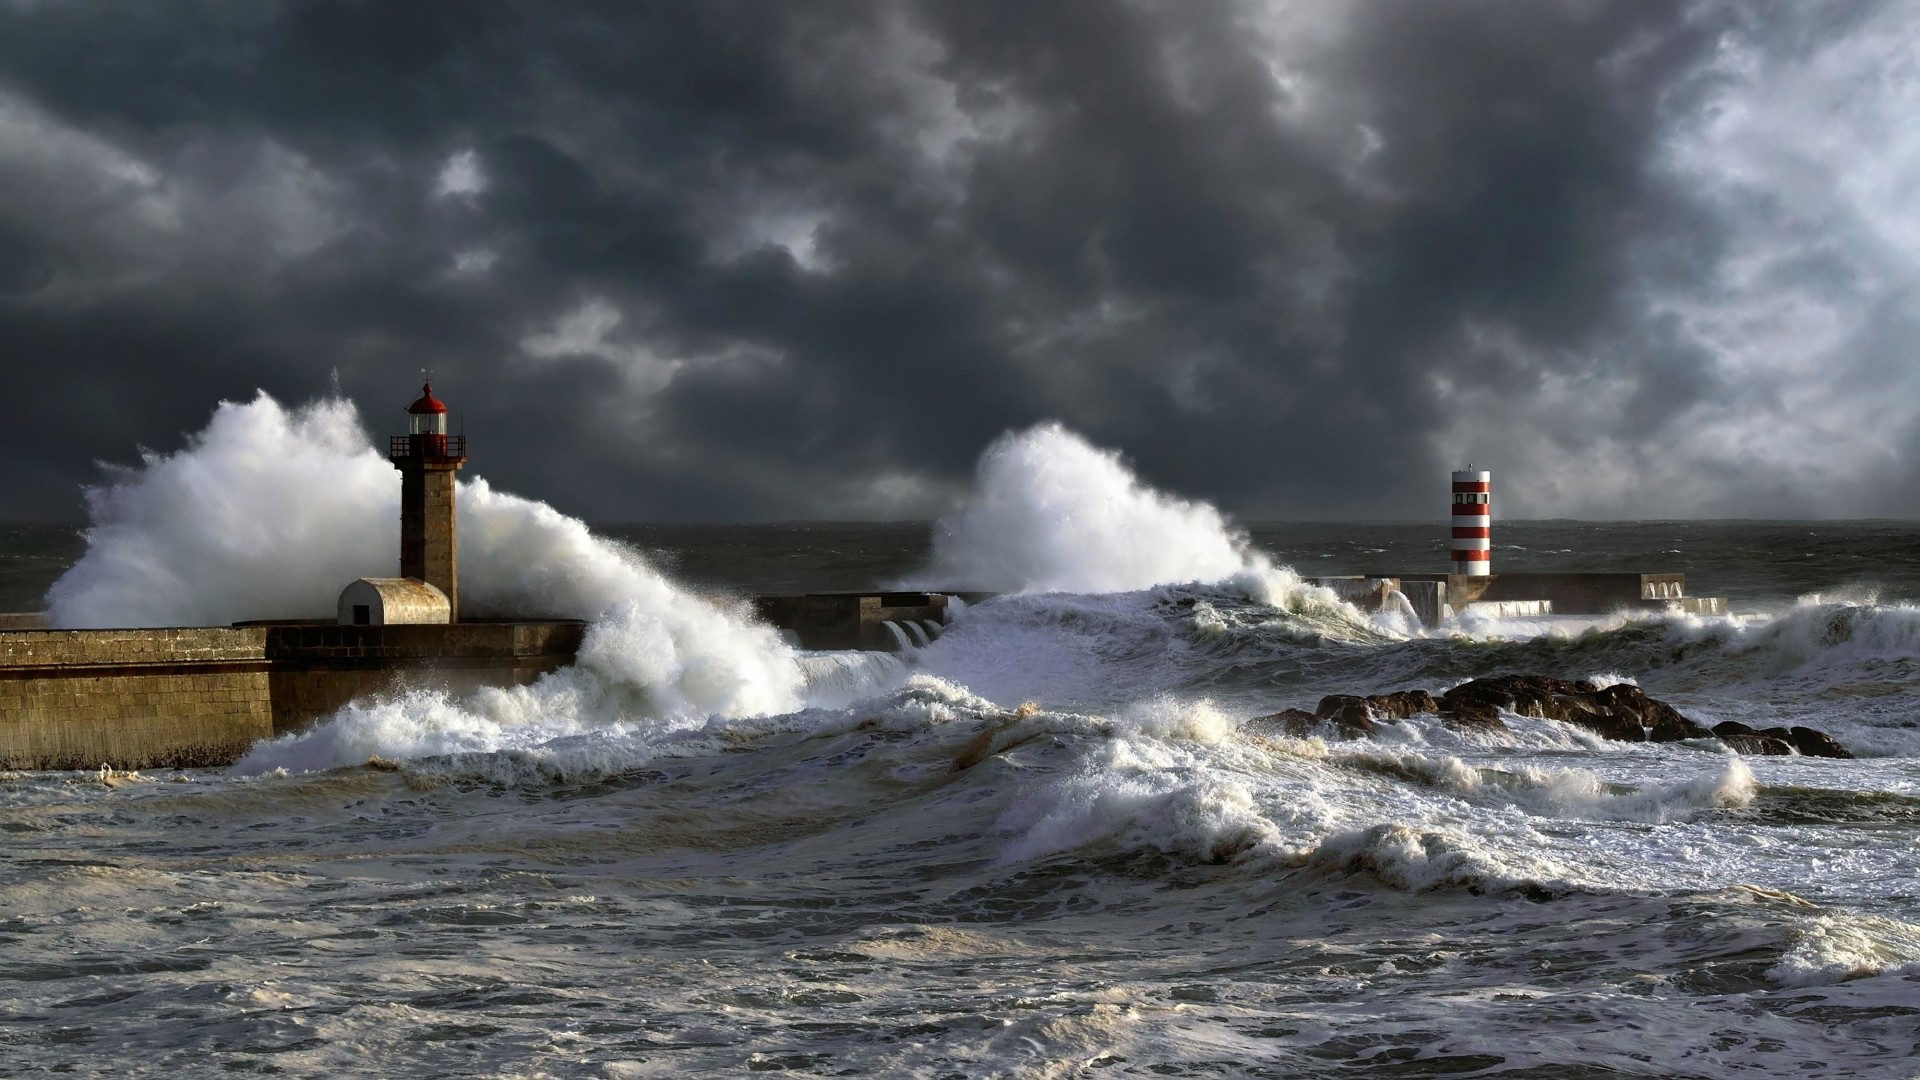 General 1920x1080 nature sea lighthouse clouds horizon waves water coast pier storm rocks city